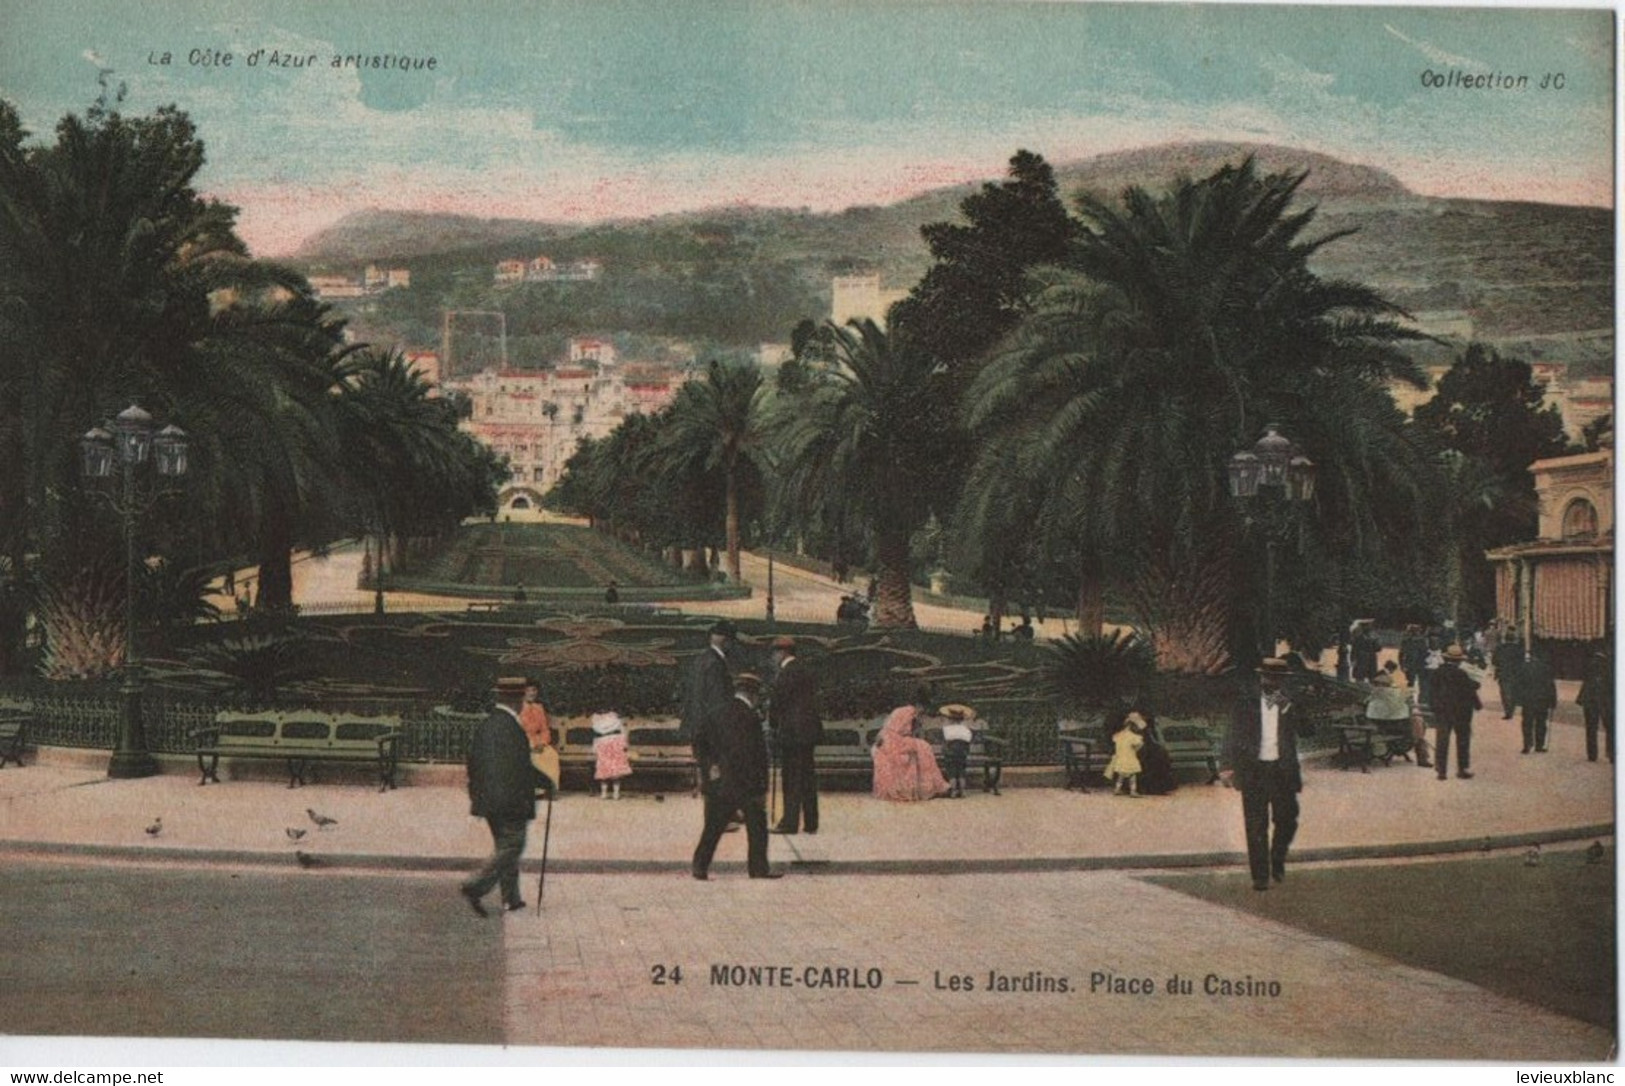 Carte Postale Ancienne /Les Jardins , Place Du Casino / MONTE-CARLO/ Monaco/ Vers1900-1930  CPDIV281 - Monte-Carlo